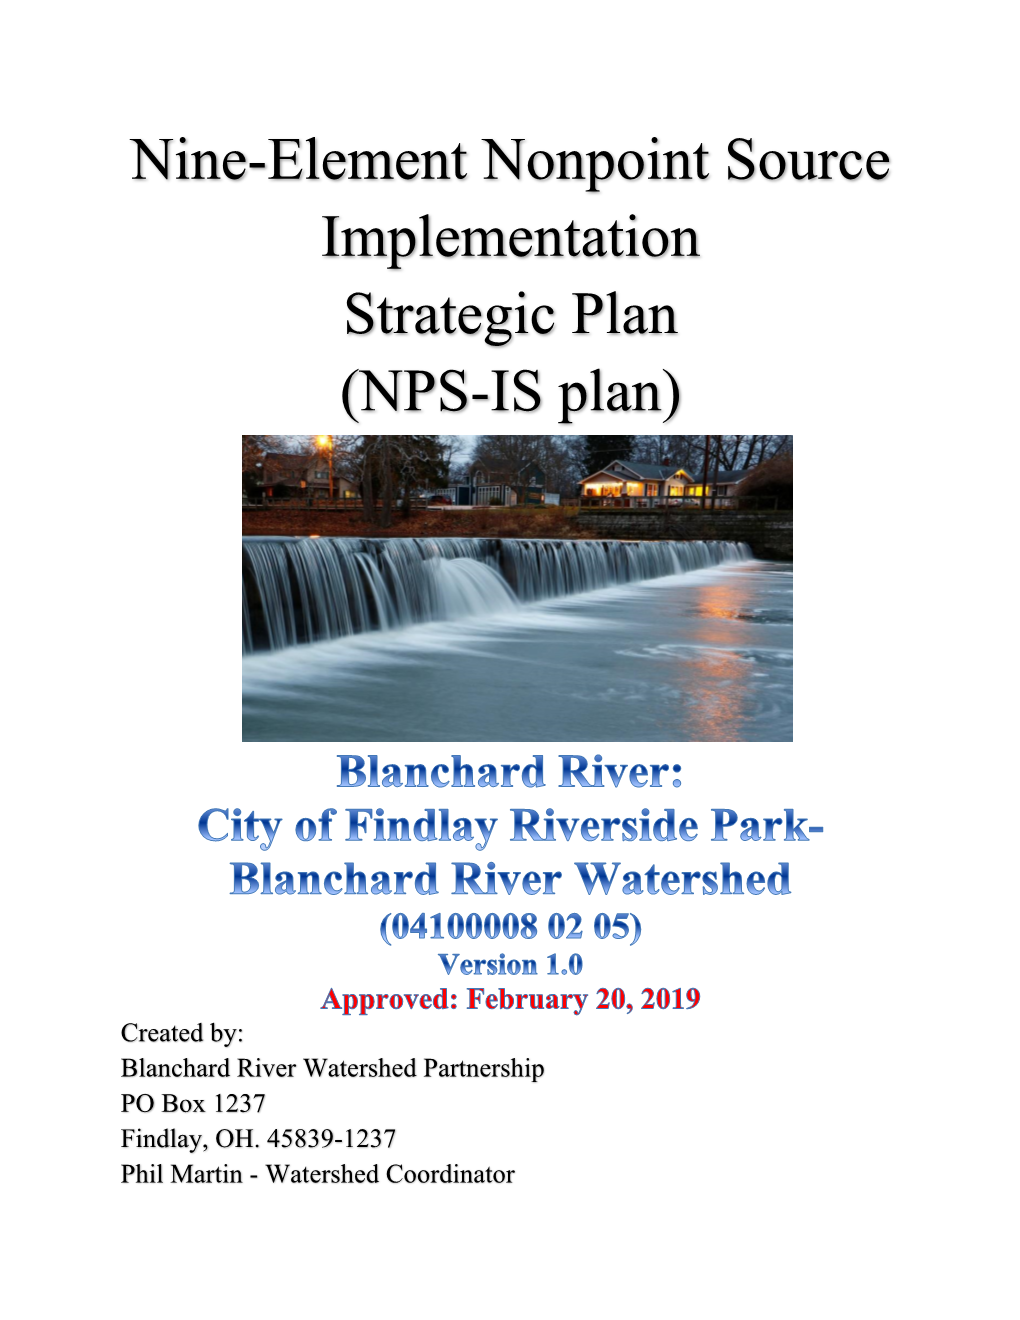 City of Findlay Riverside Park- Blanchard River HUC-12